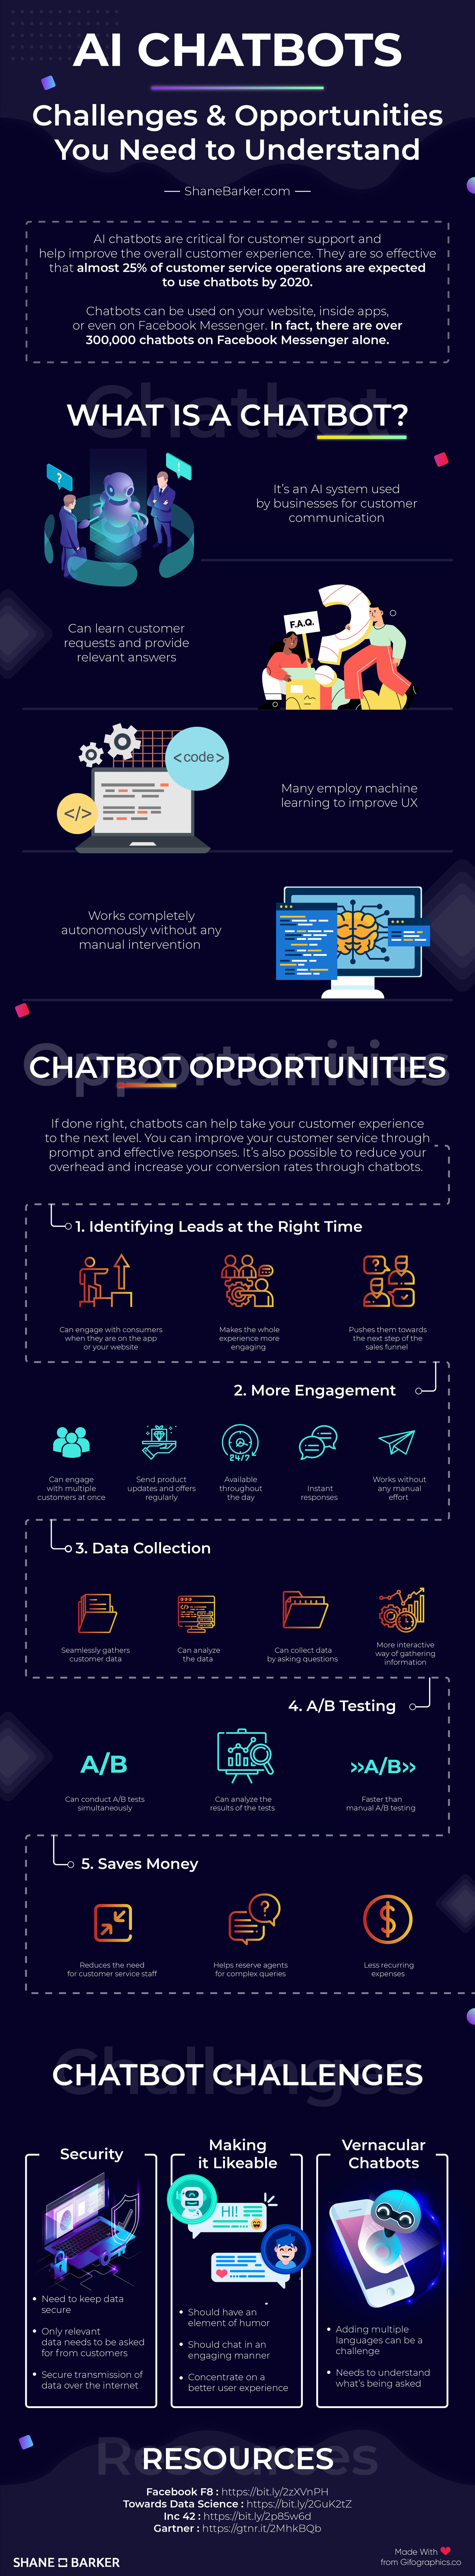 benefits of AI chatbots